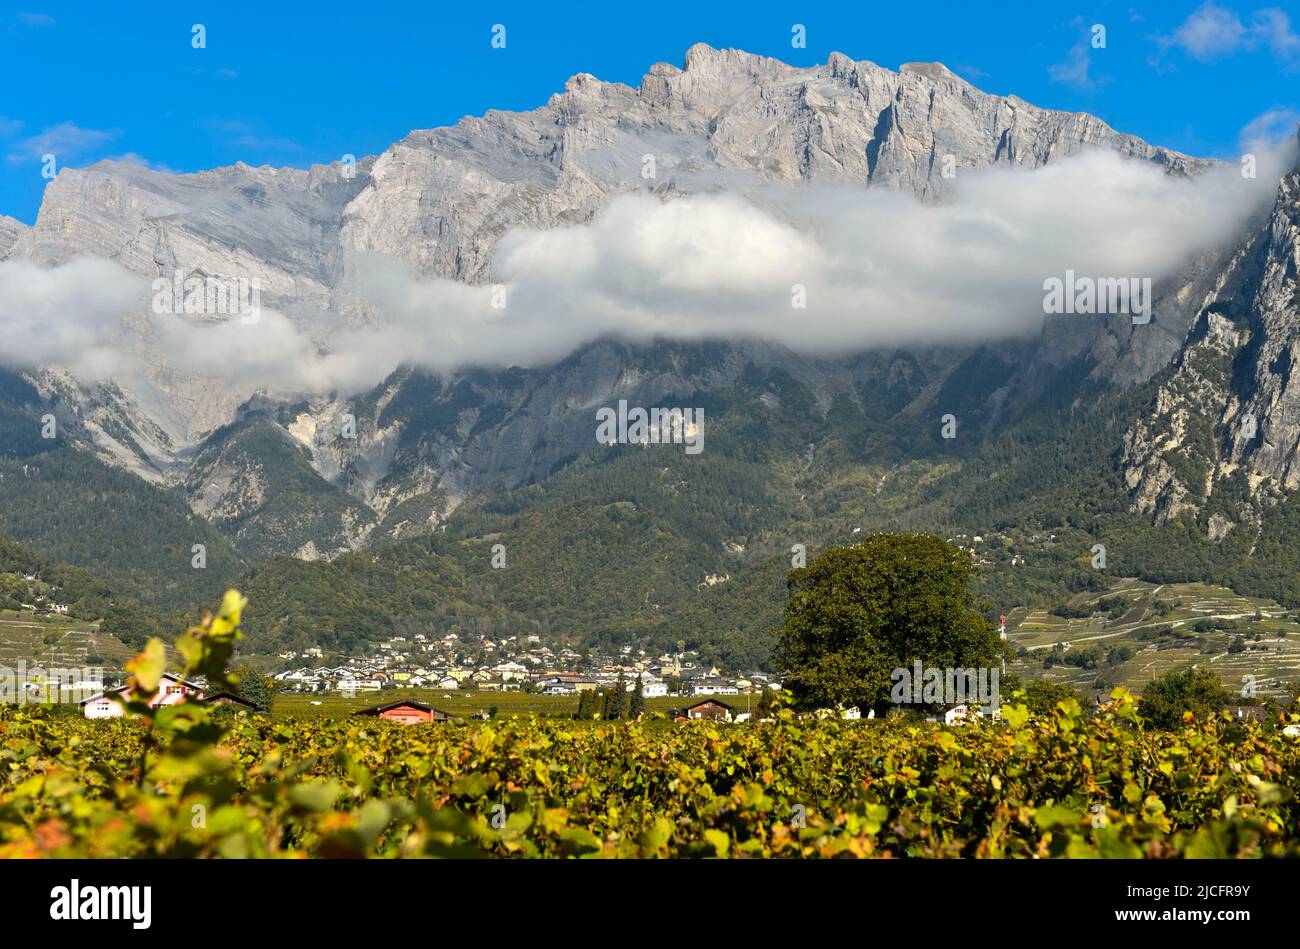 Chamoson vineyard in front of the rock walls of the peak Haut de Cry, Chamoson, Valais, Switzerland Stock Photo